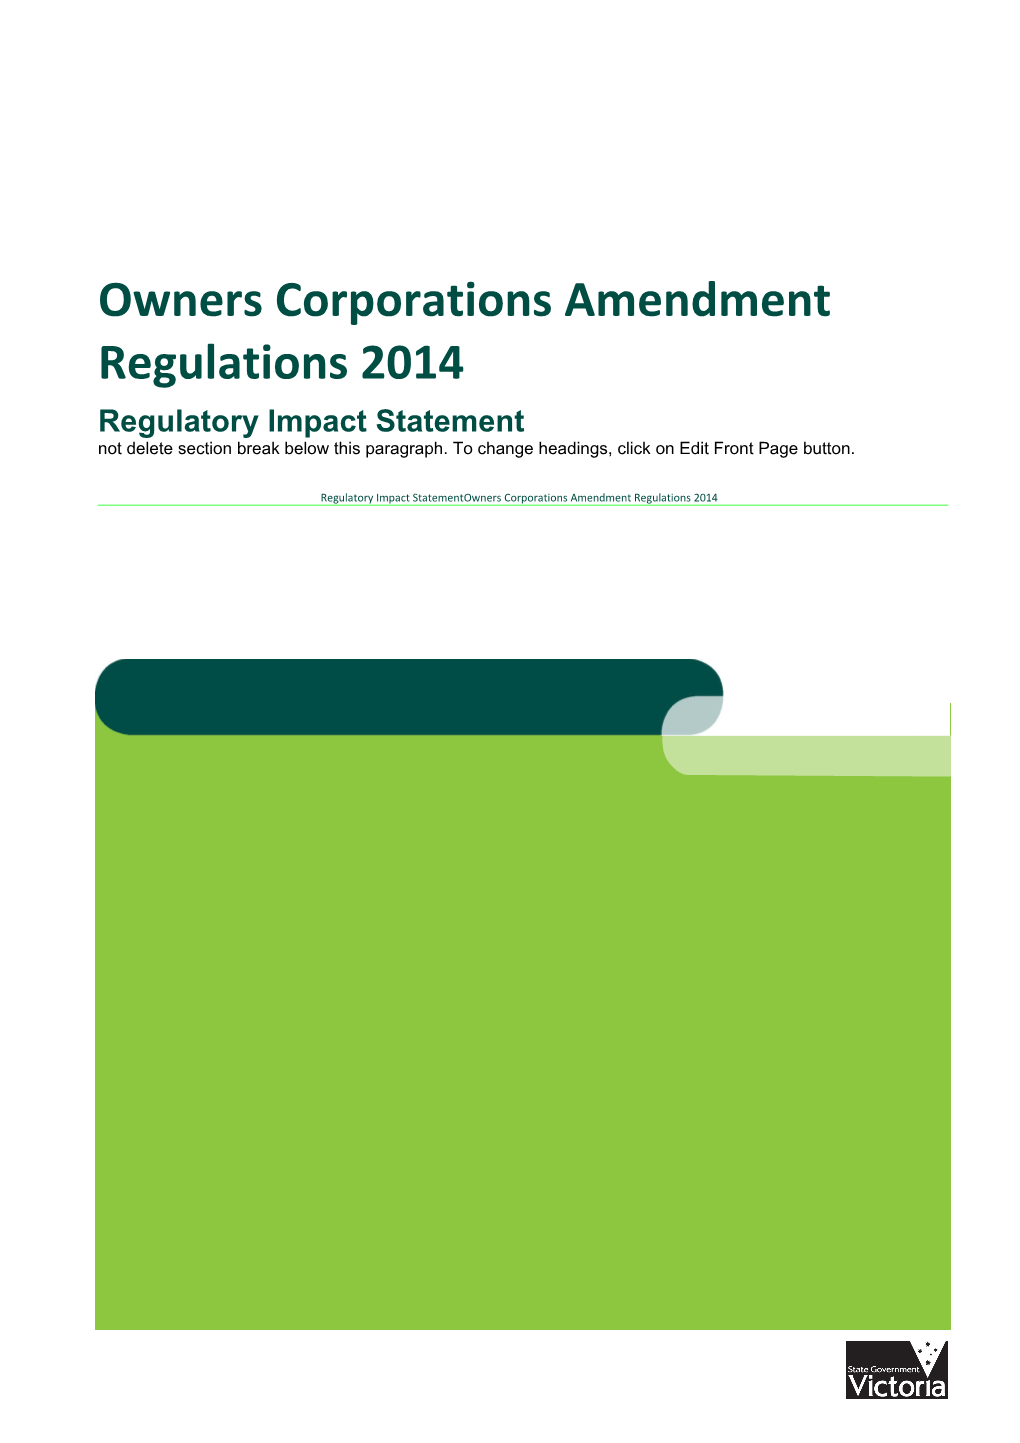 Owners Corporations Amendment Regulations 2014 Regulatory Impact Statement